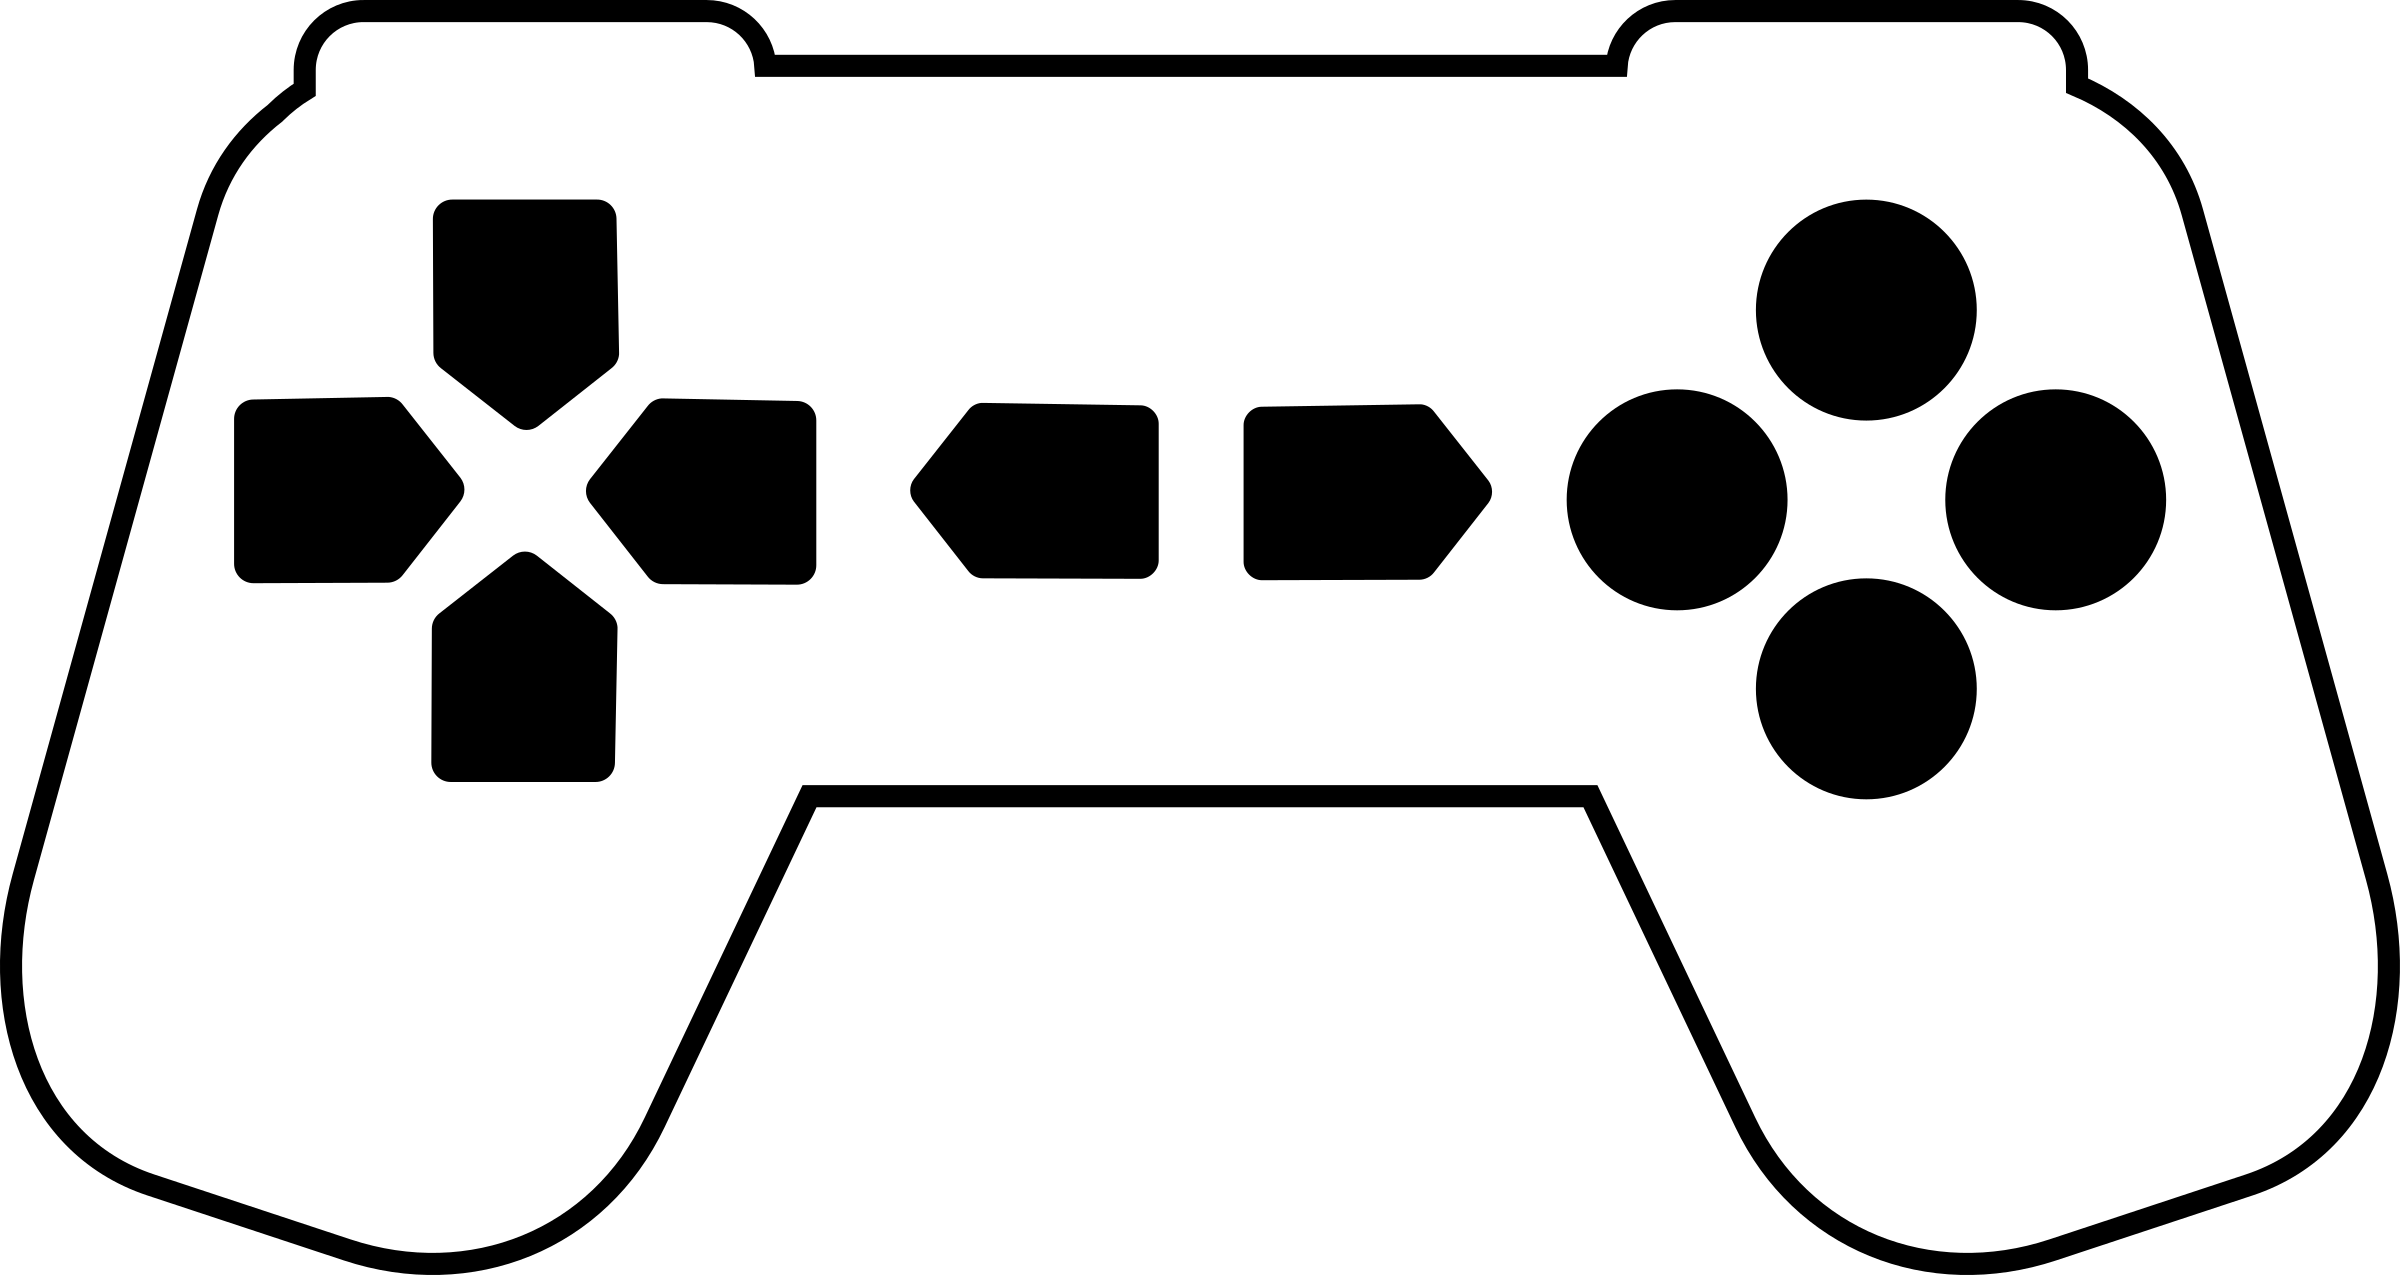 Game Controller Clipart